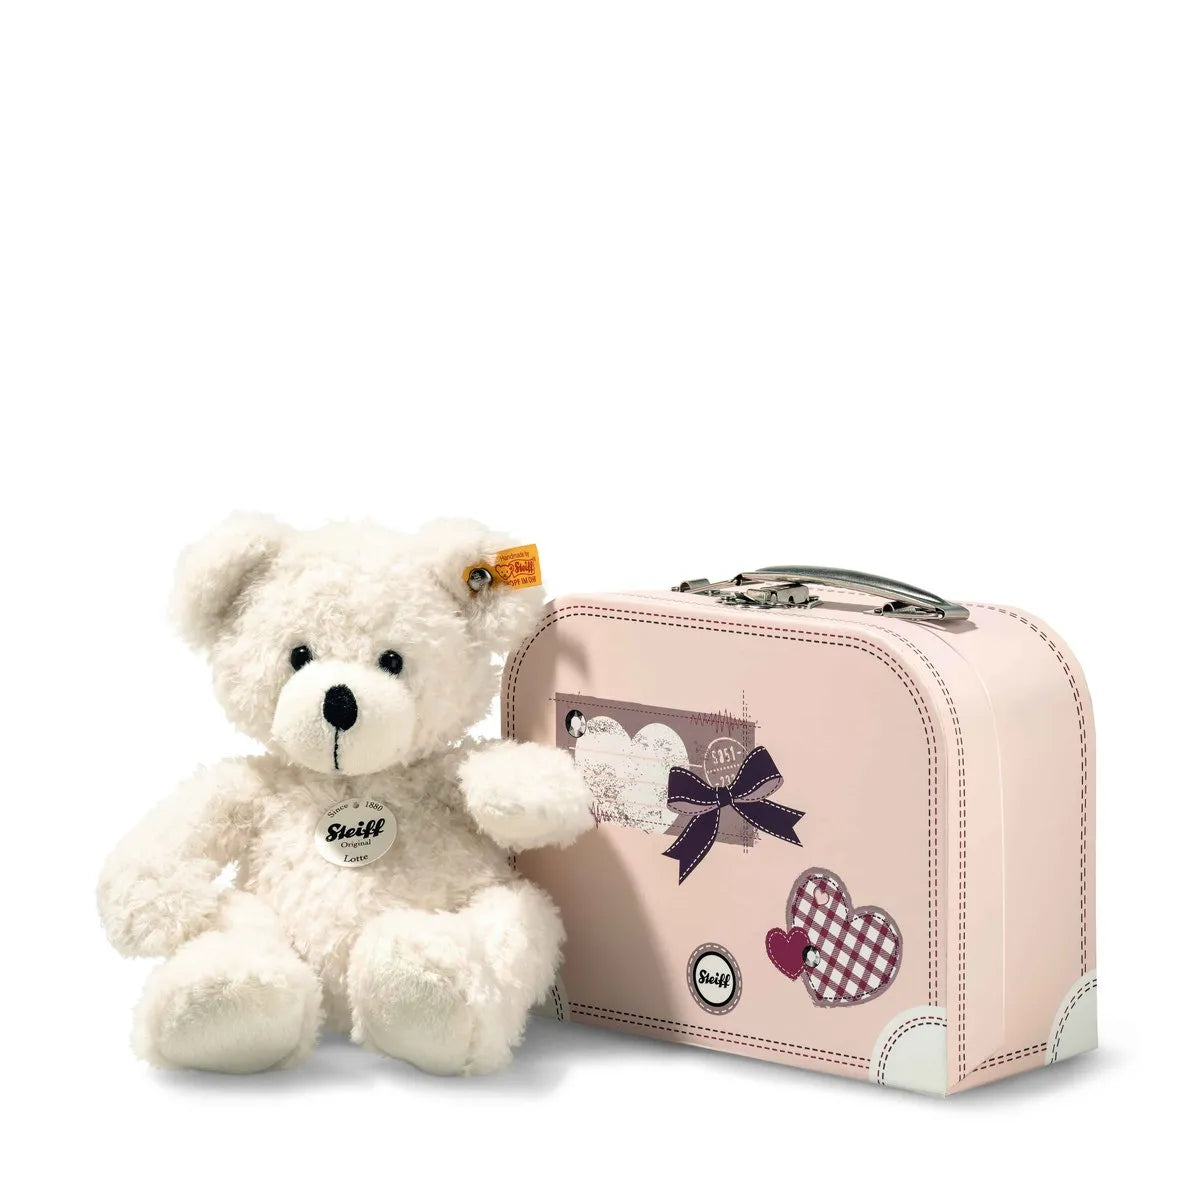 Steiff Lotte in Pink Suitcase